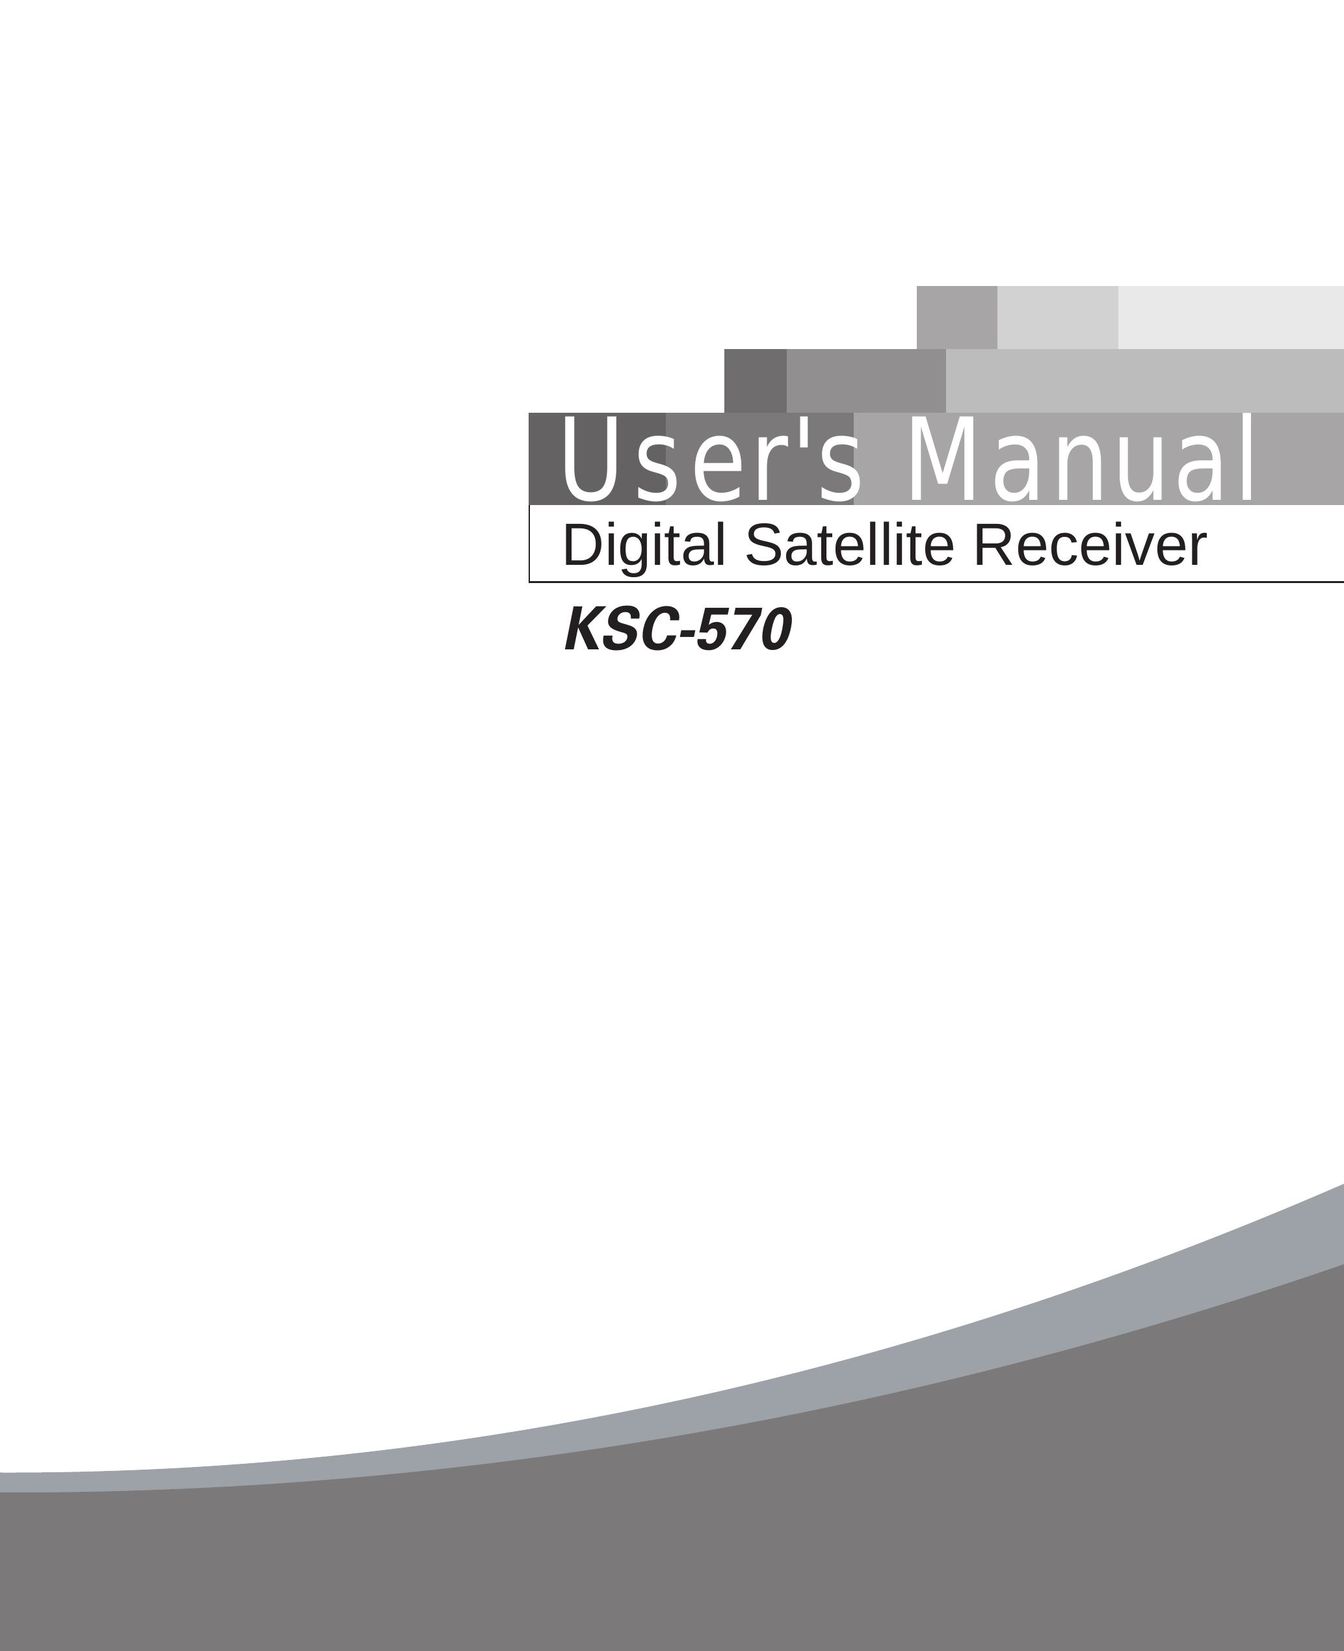 HP (Hewlett-Packard) KSC-570 Satellite Radio User Manual